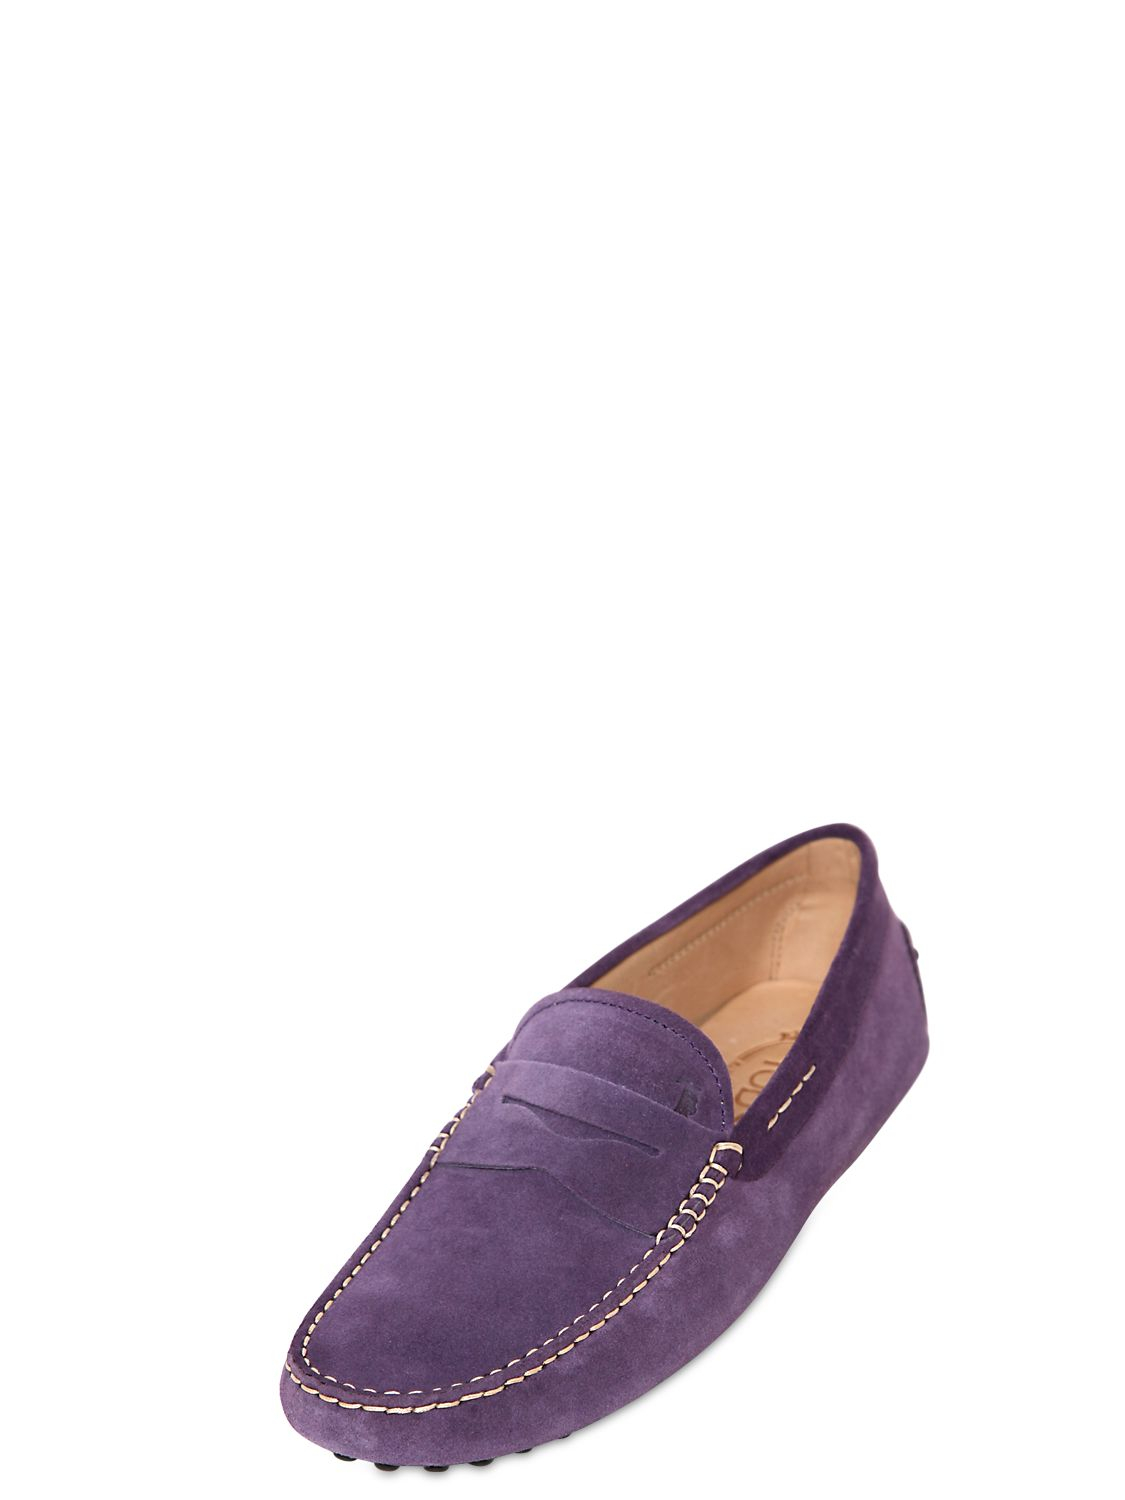 purple driving shoes